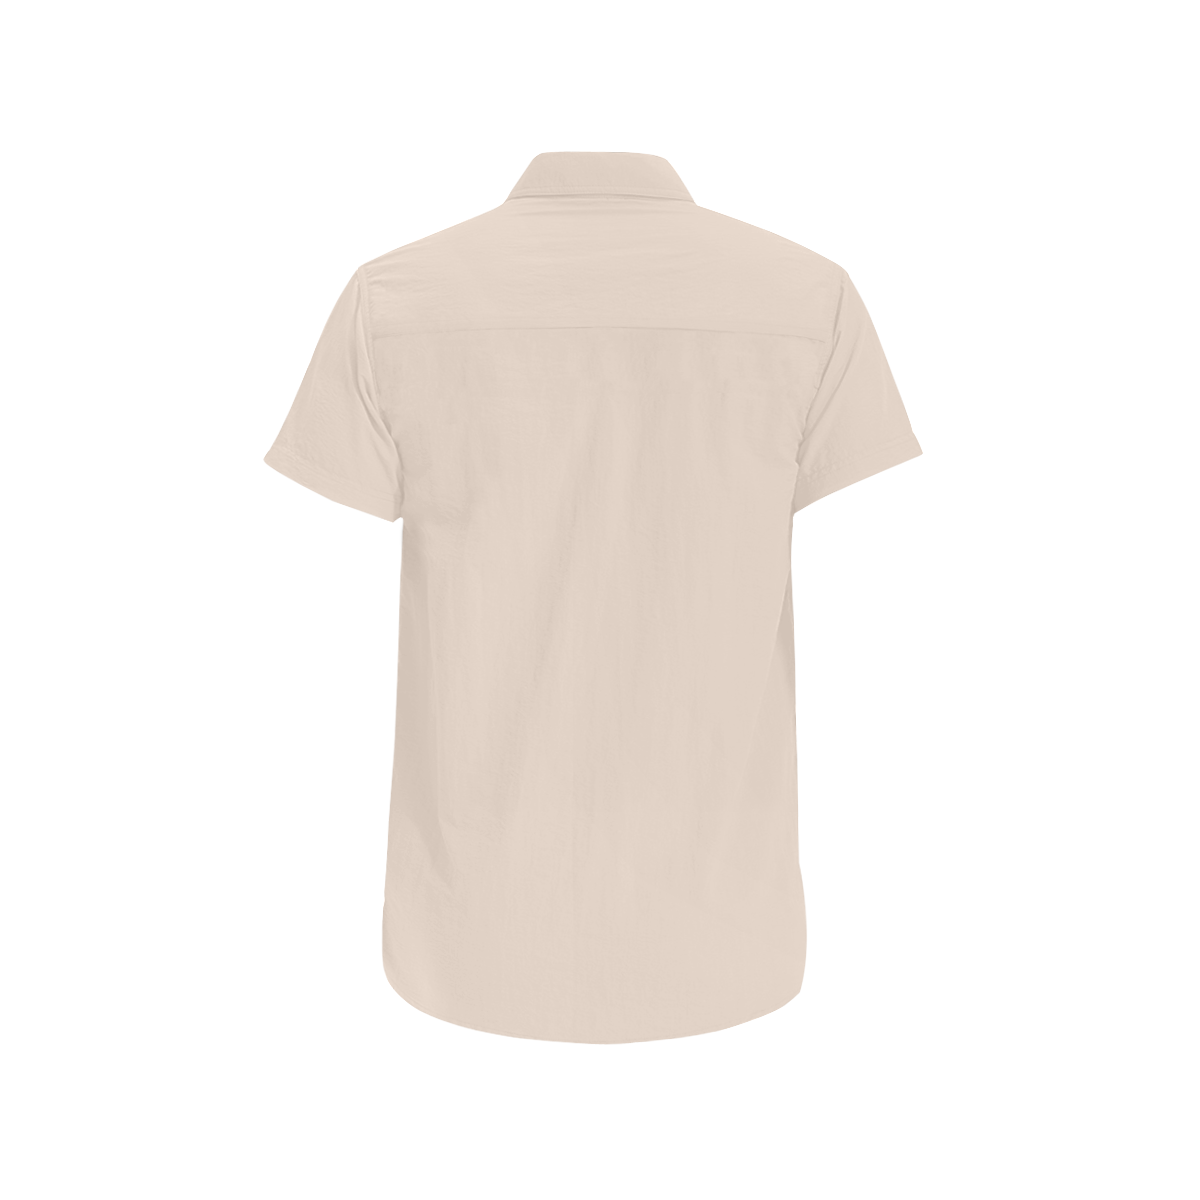 color champagne pink Men's All Over Print Short Sleeve Shirt (Model T53)